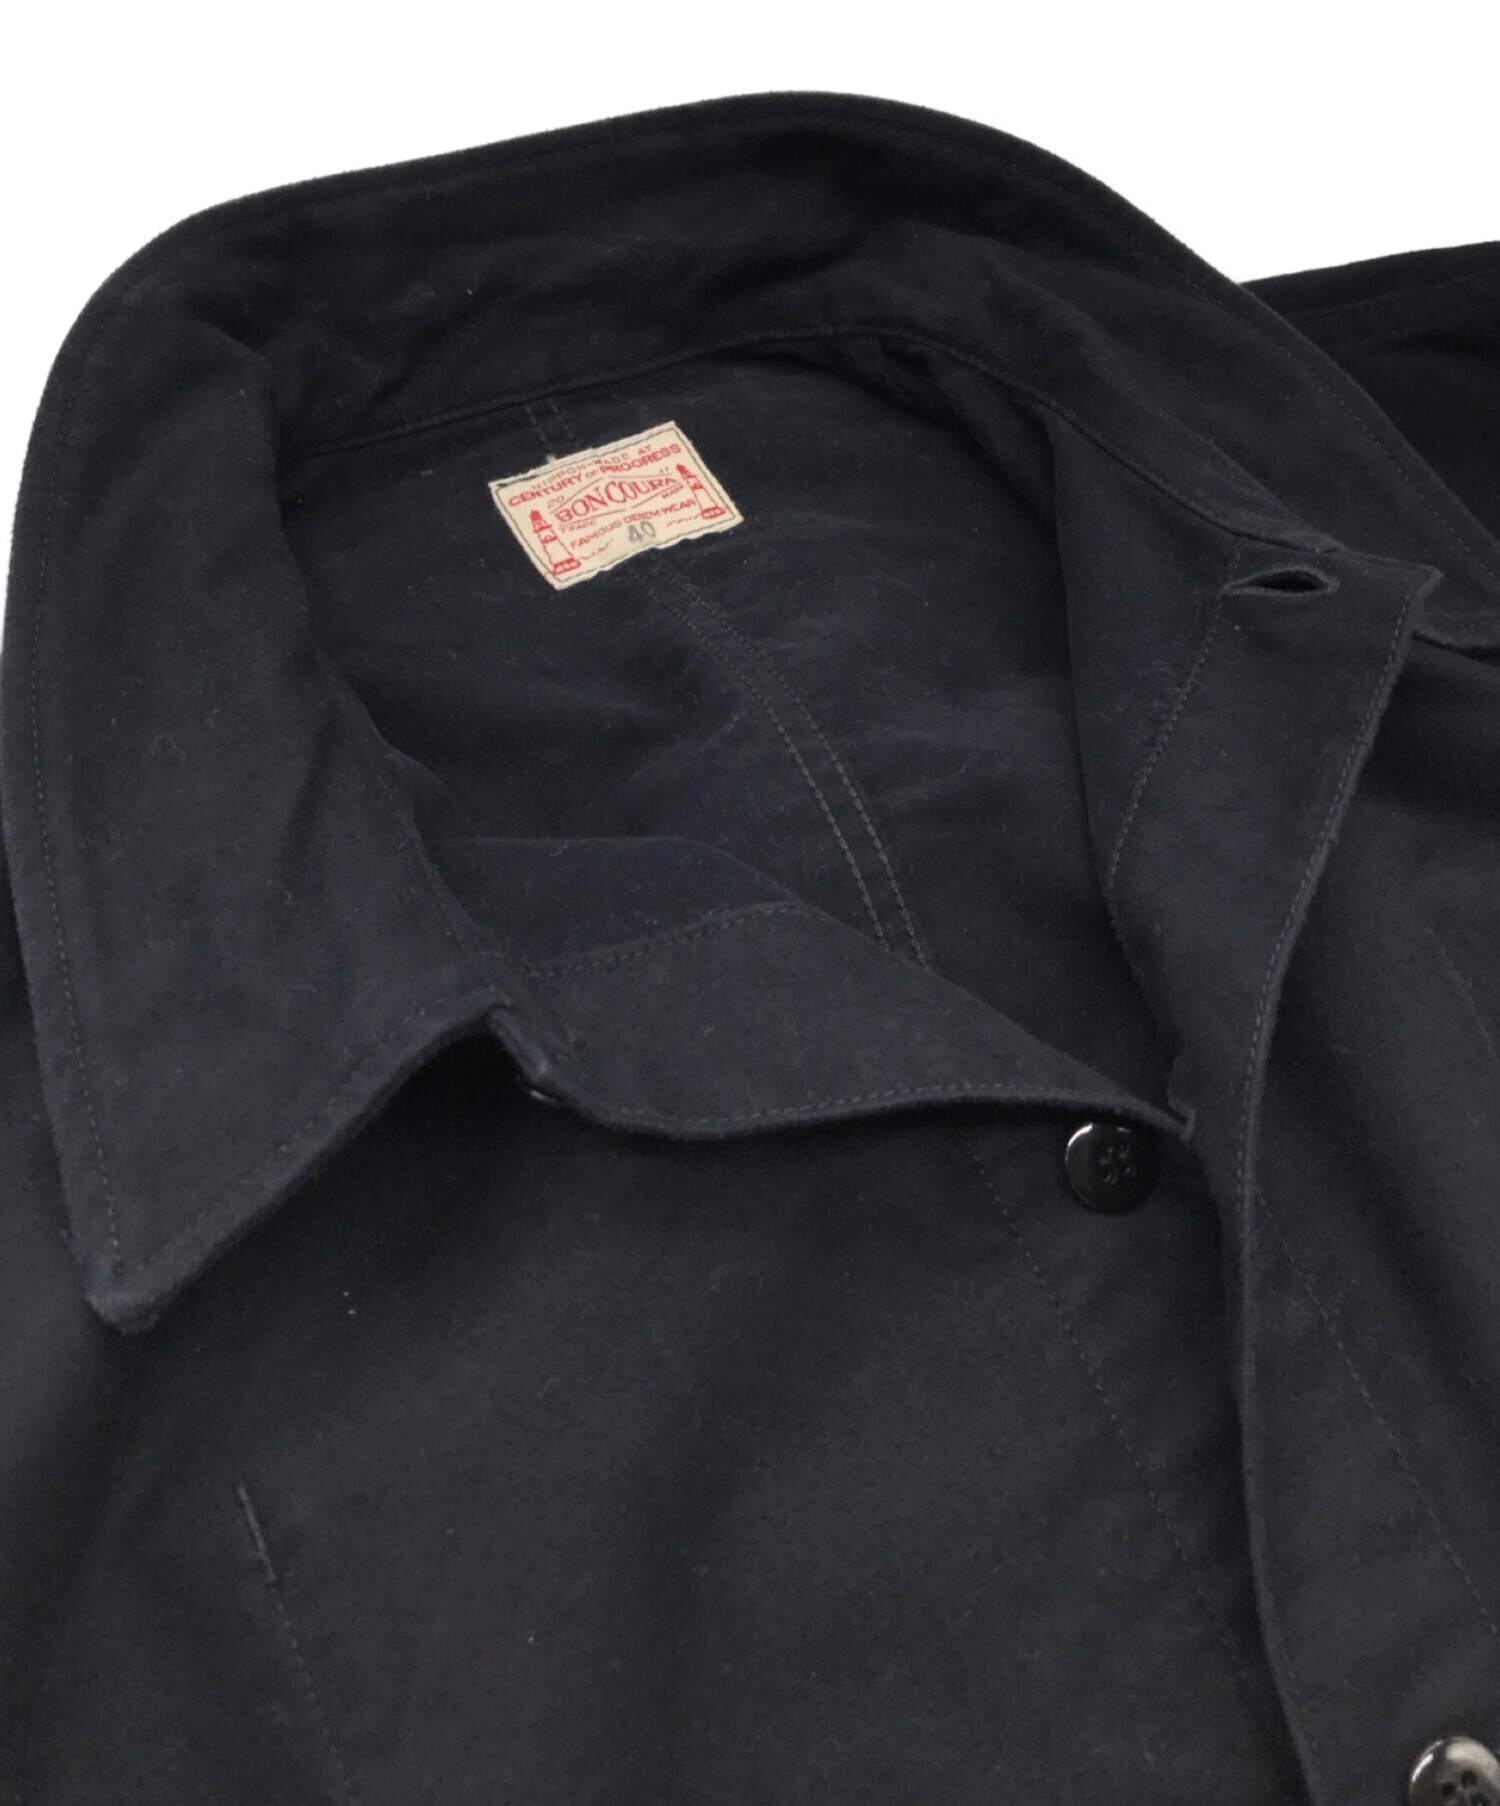 BONCOURA (ボンクラ) French Work Jacket. “Arch LIMITED” ブラック サイズ:40